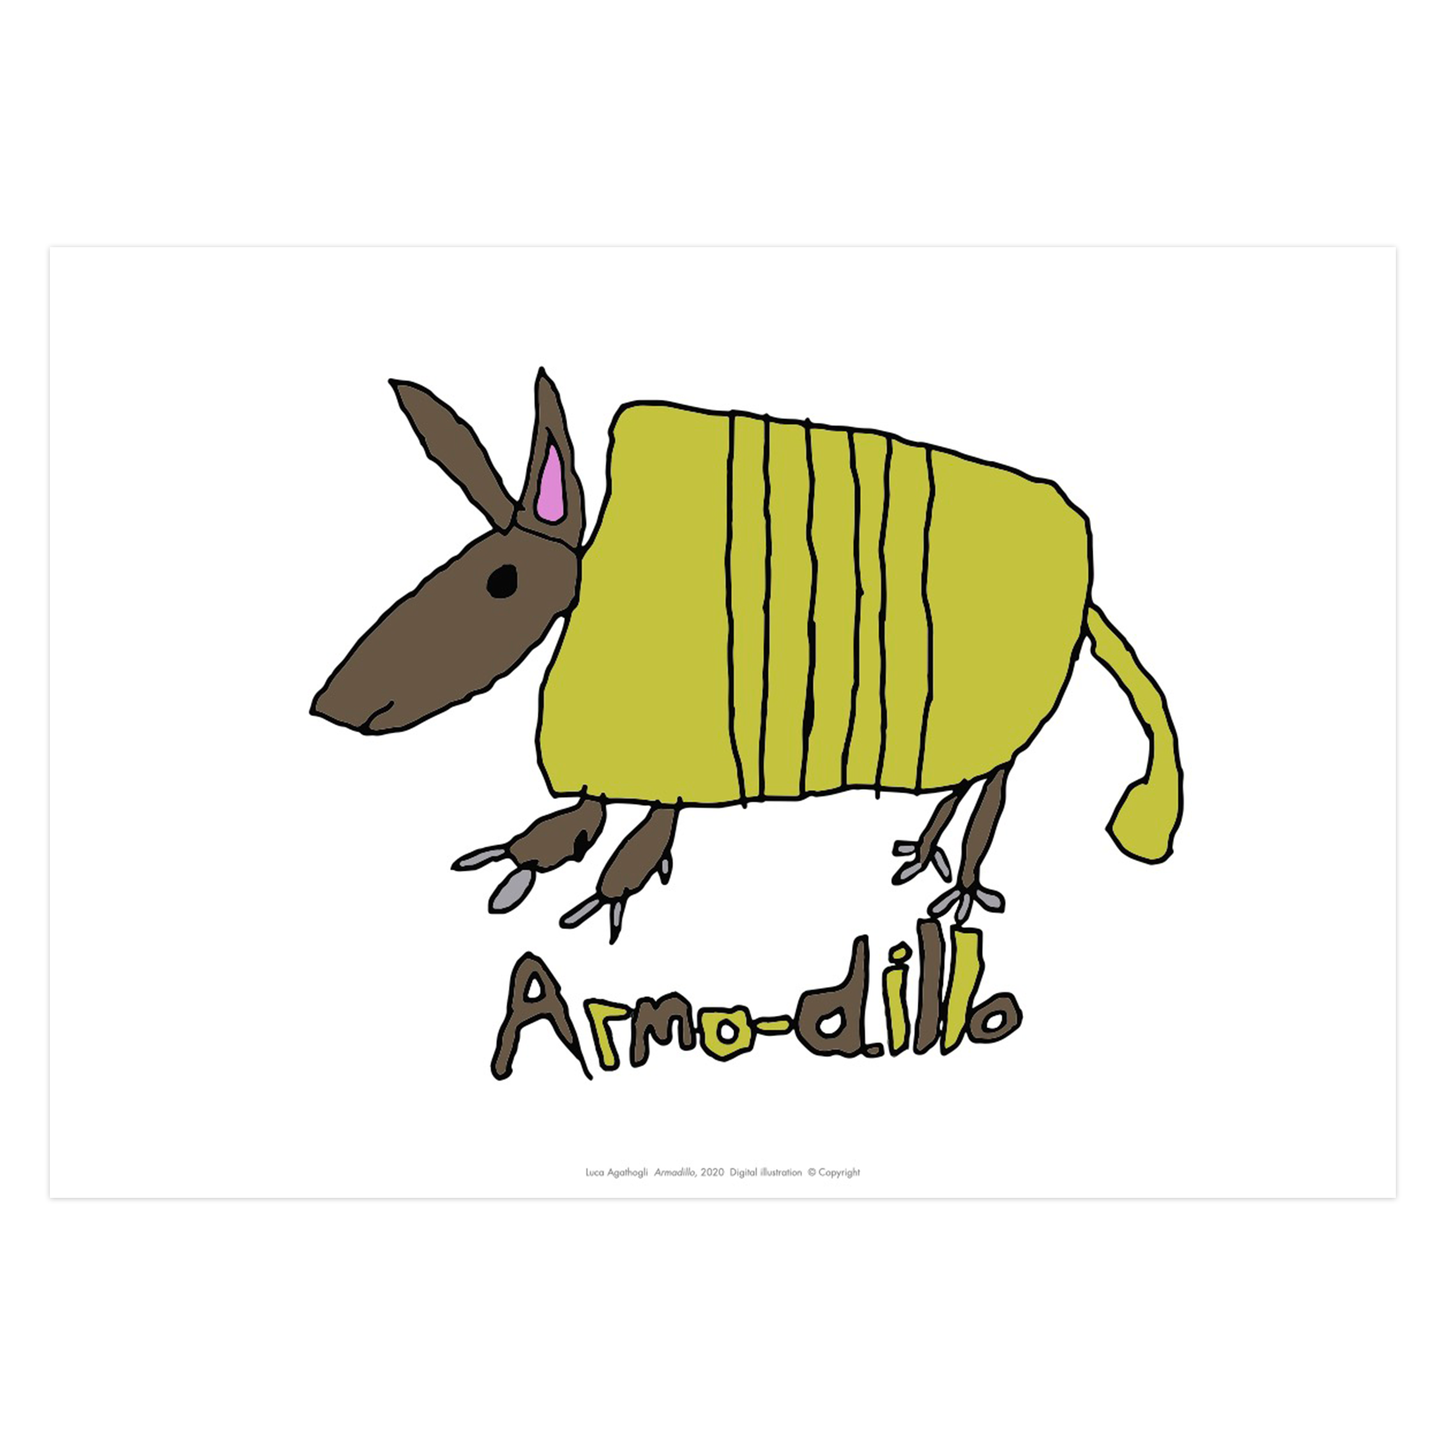 Drawing of an armadillo